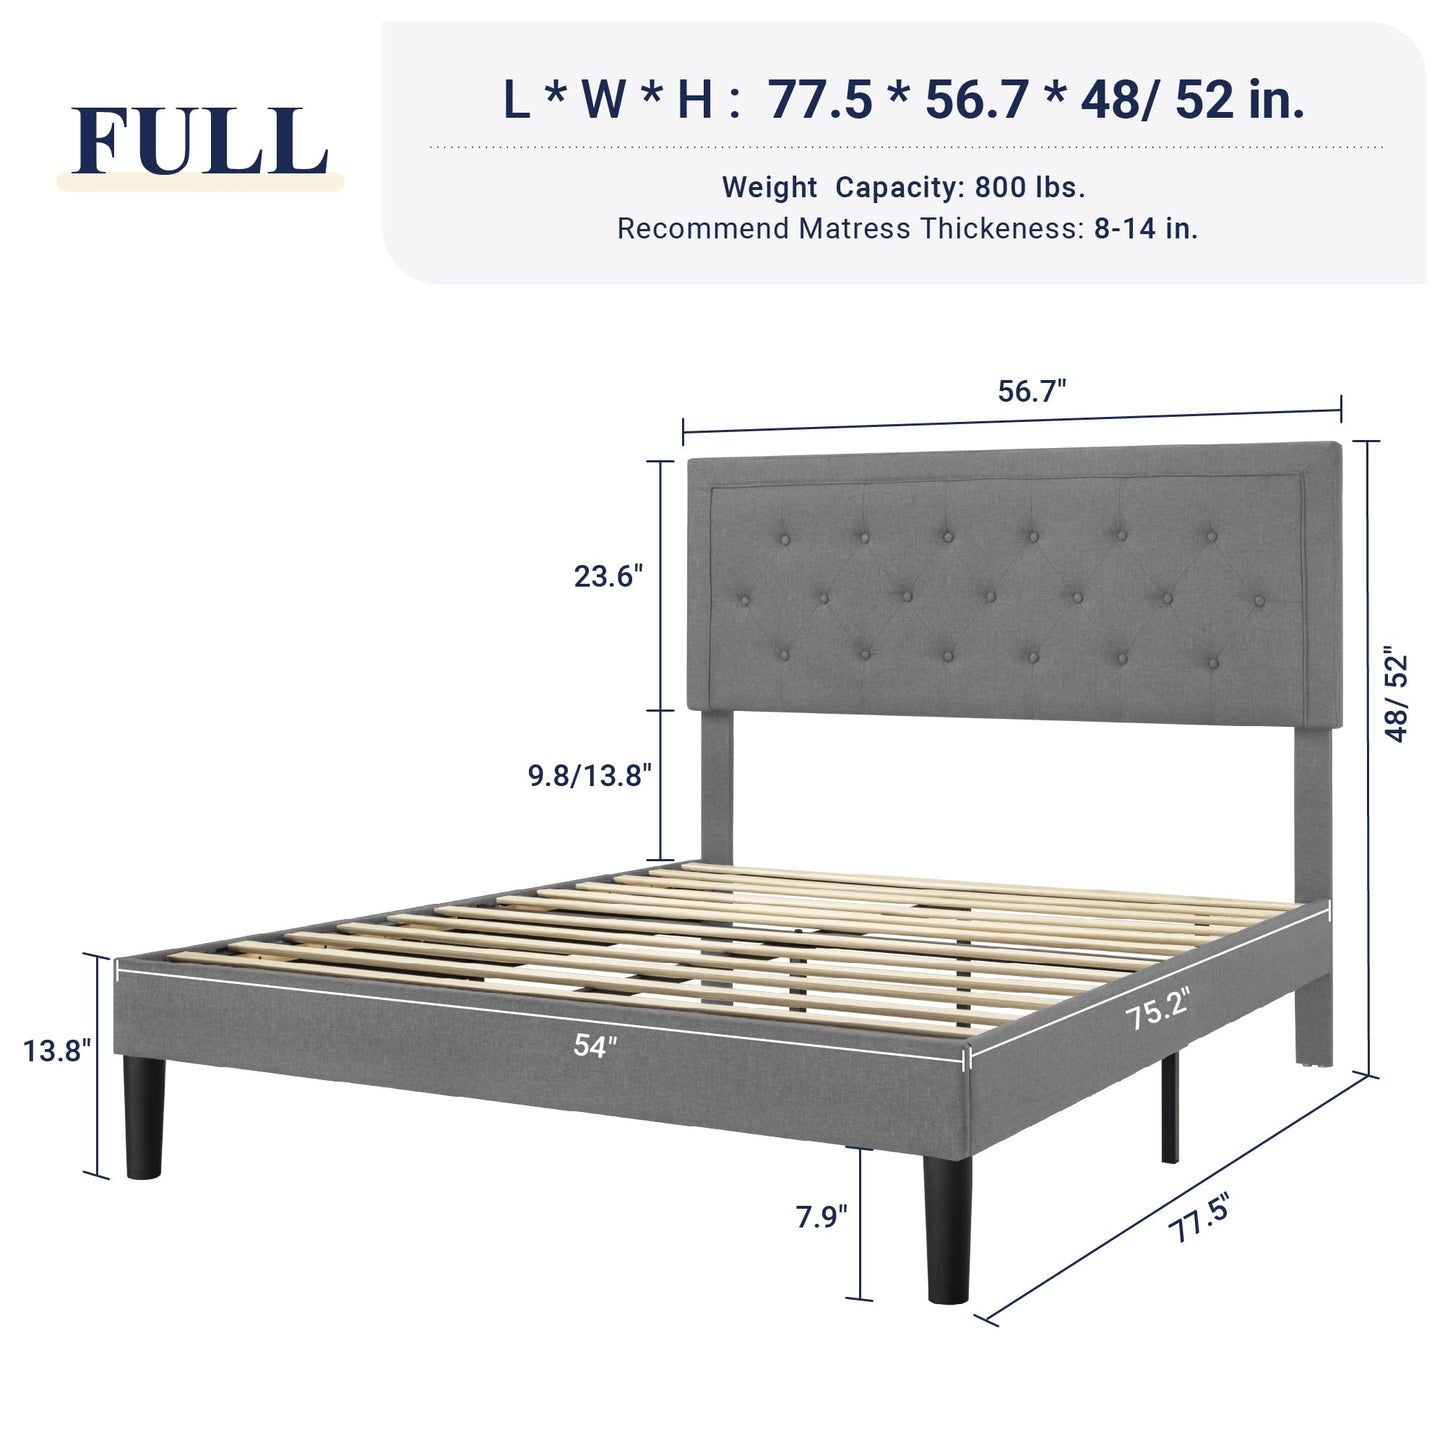 Allewie Full Size Bed Frame Upholstered Platform Bed with Adjustable Headboard, Button Tufted, Wood Slat Support, Easy Assembly, Light Grey